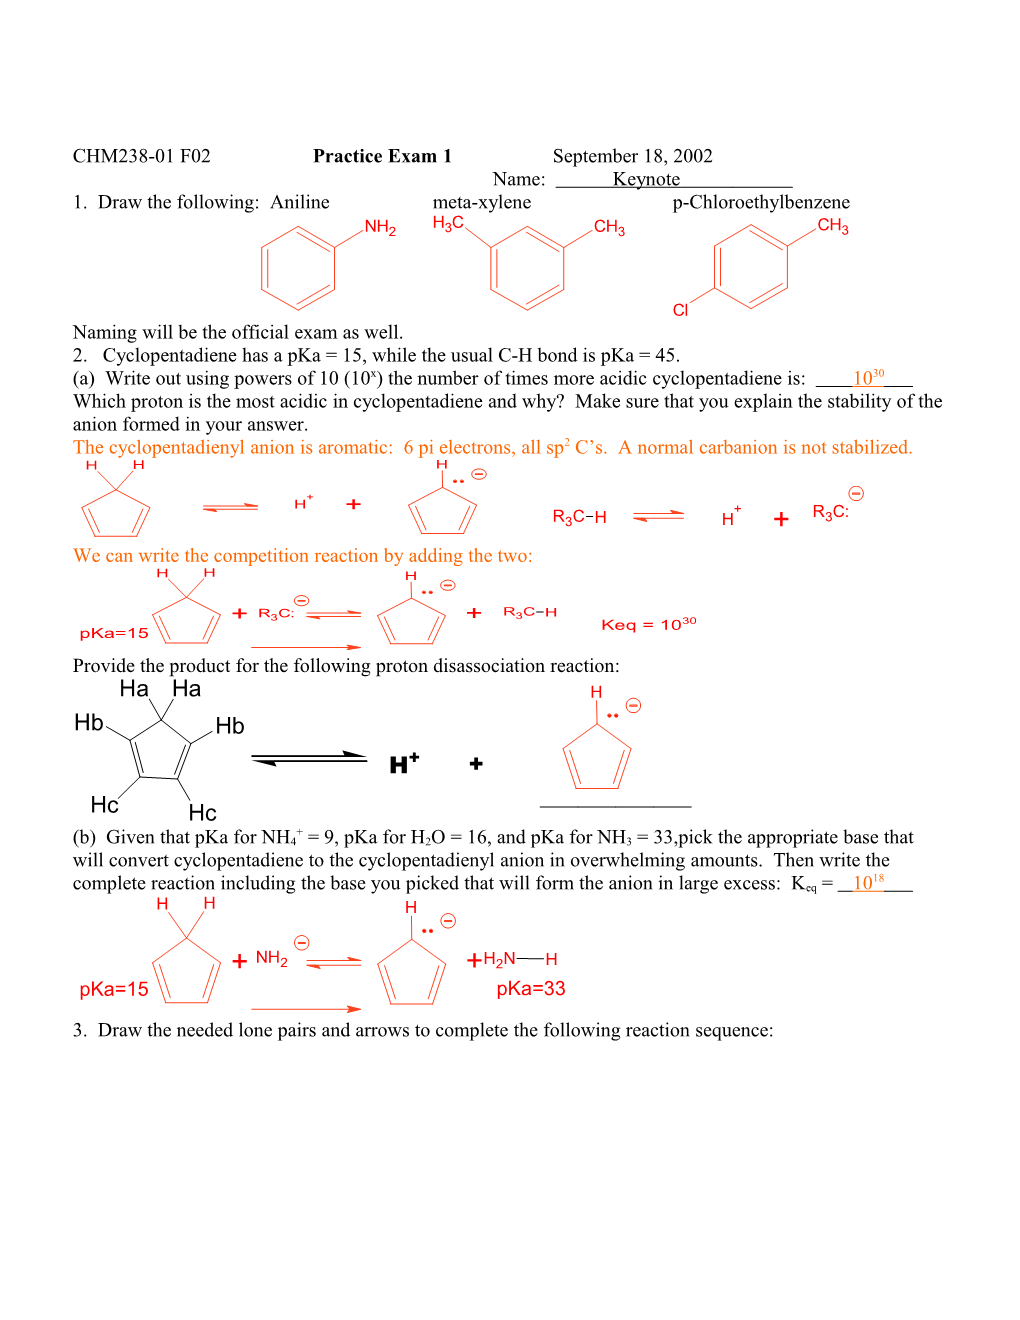 1. Draw the Following: Aniline Meta-Xylene P-Chloroethylbenzene